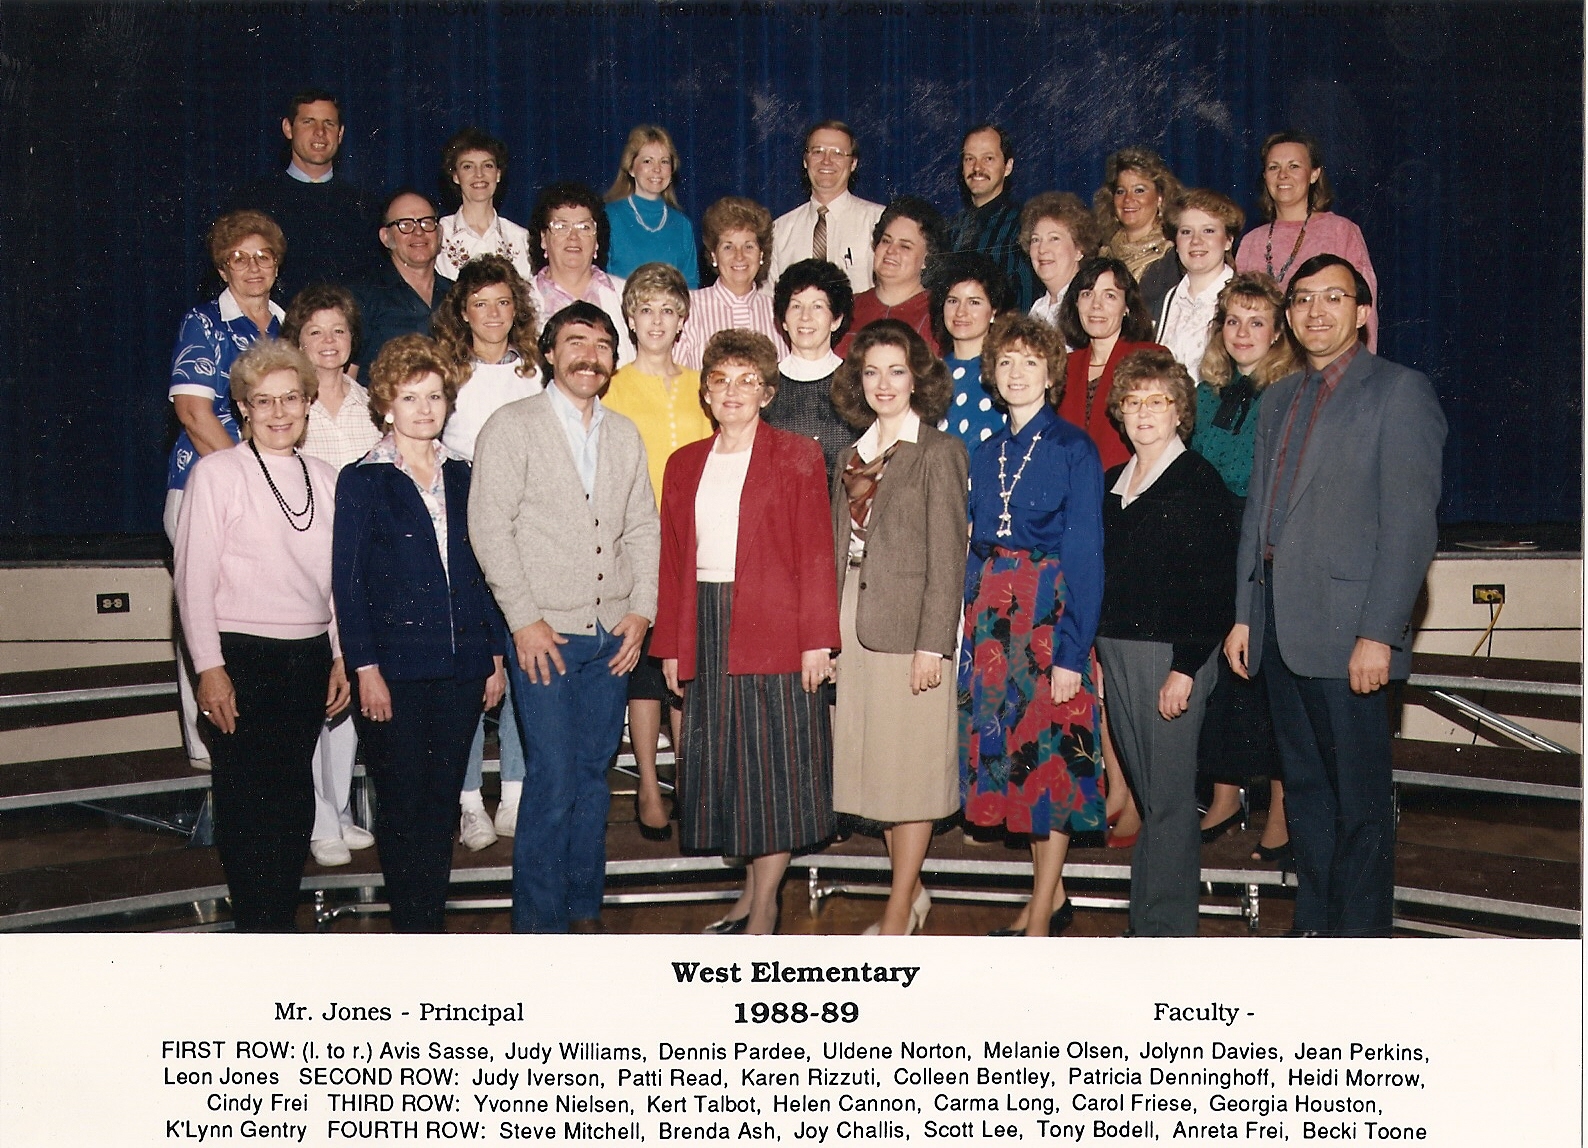 WCHS-00245 West Elementary School 1988-1989 Faculty